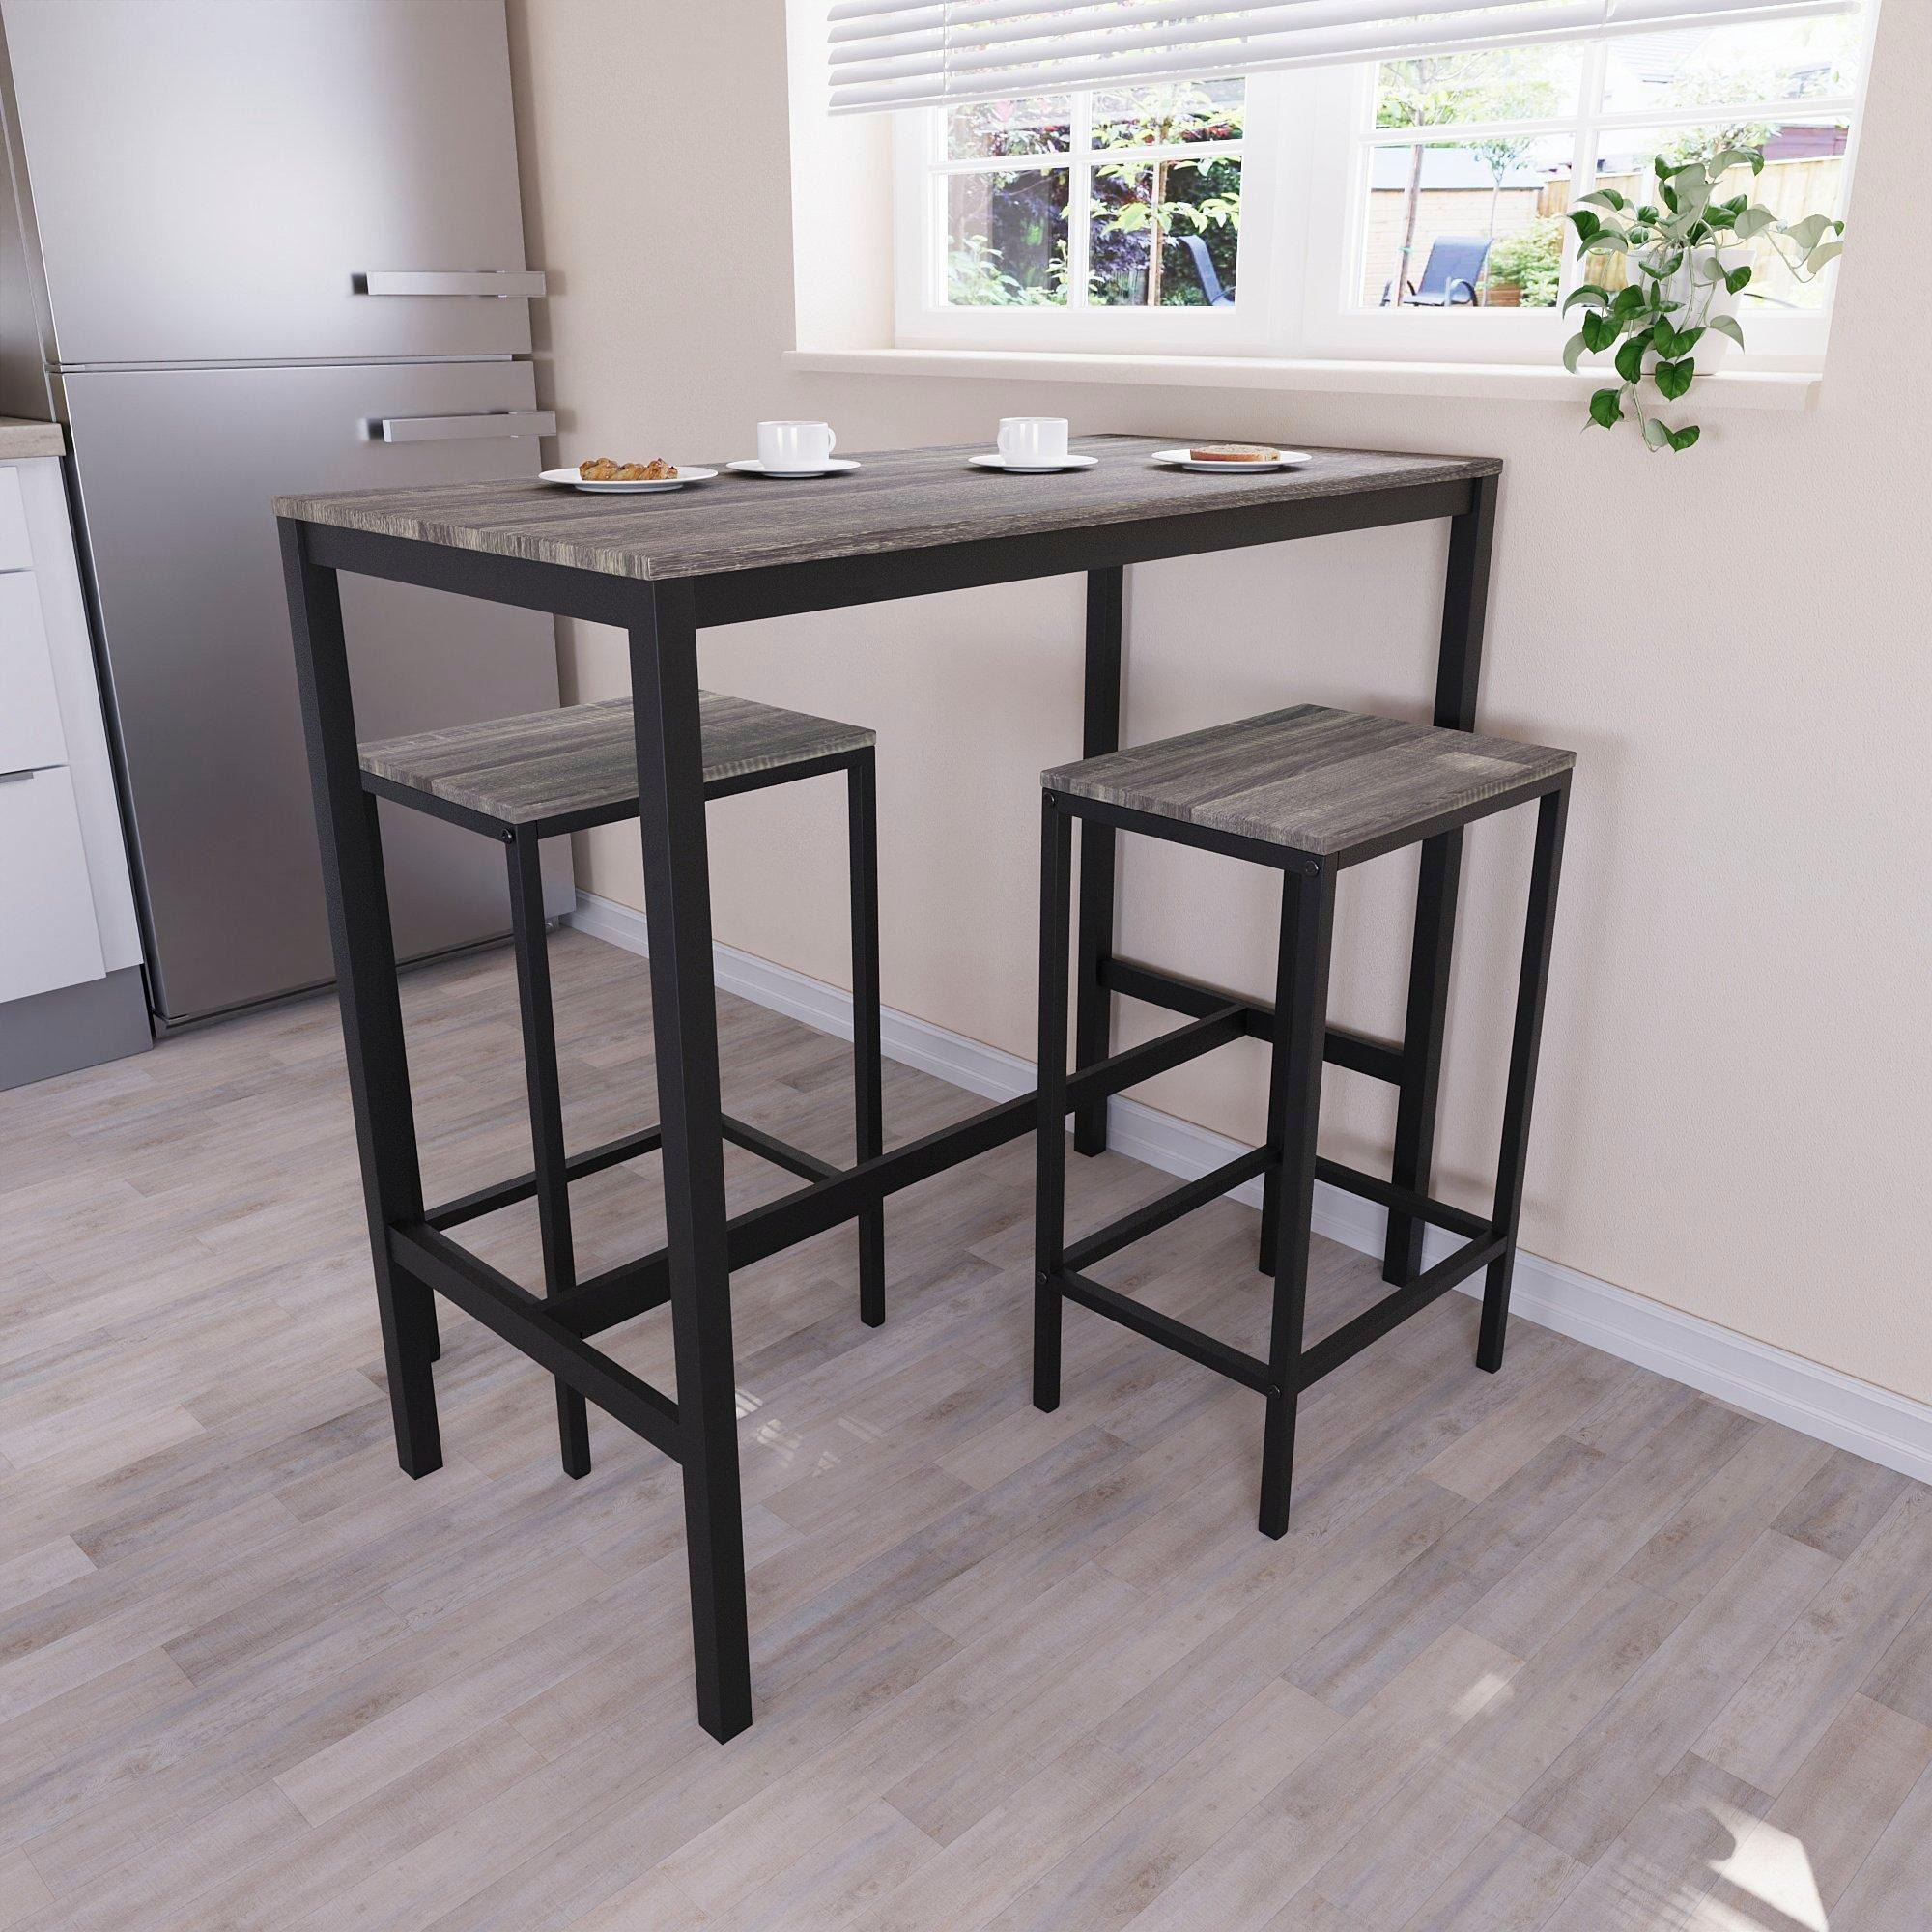 Vida Designs Roslyn 2 Seater Bar Table Set Stools Kitchen Dining Furniture Set Of 2 - image 1